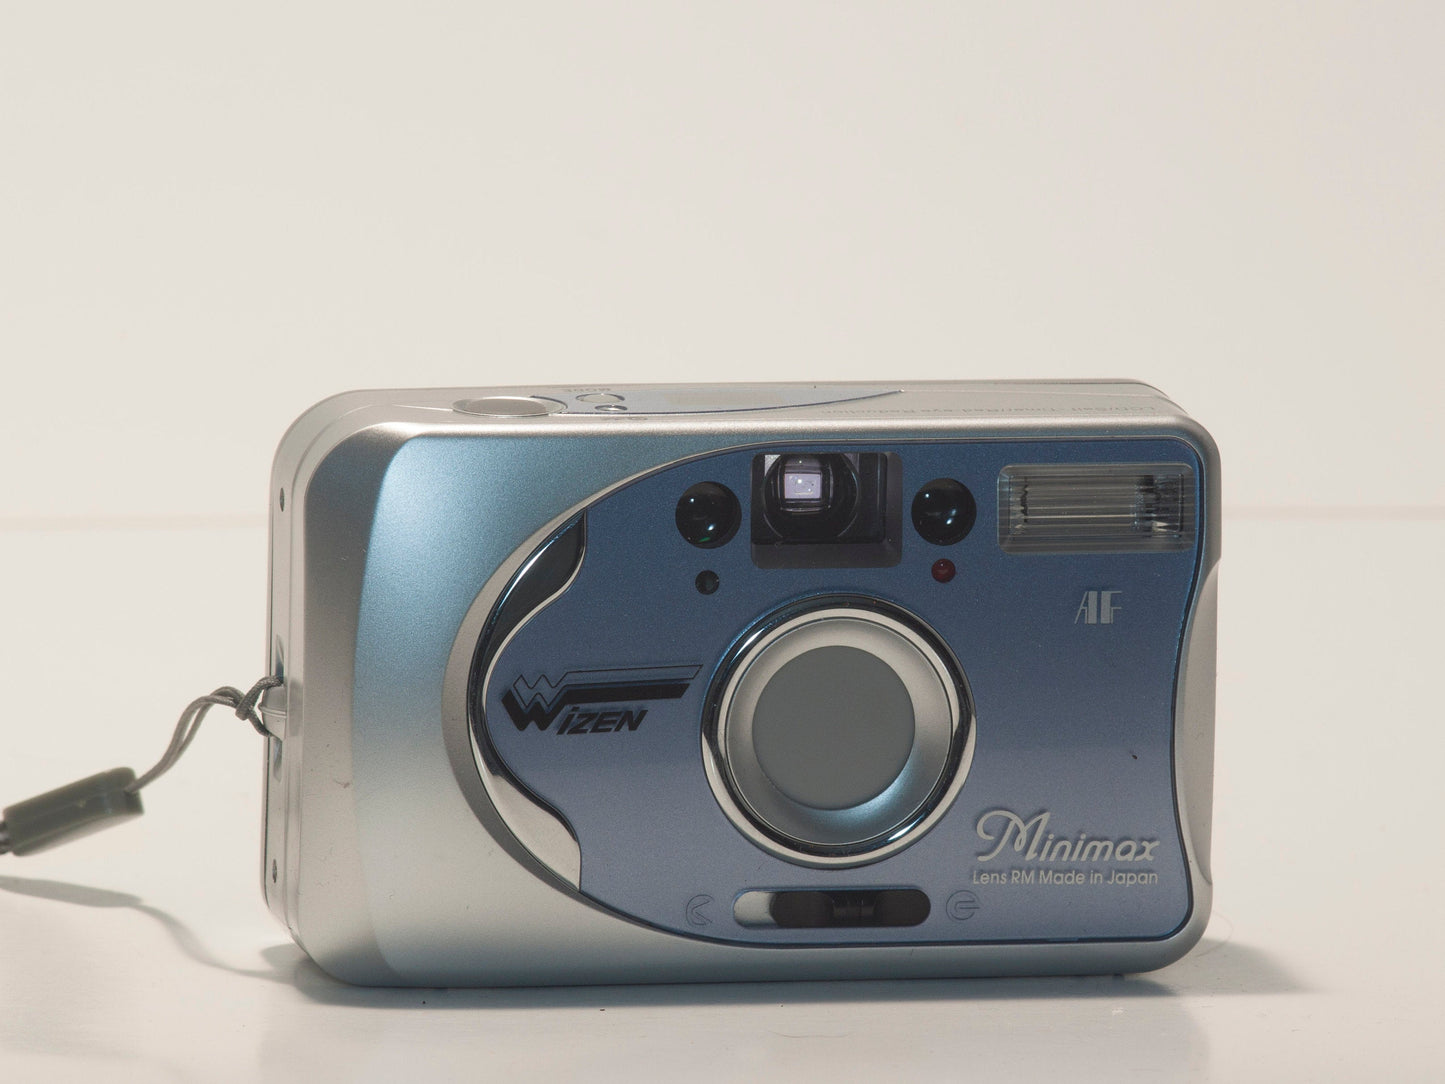 Appareil photo compact Wizen Minimax 35 mm